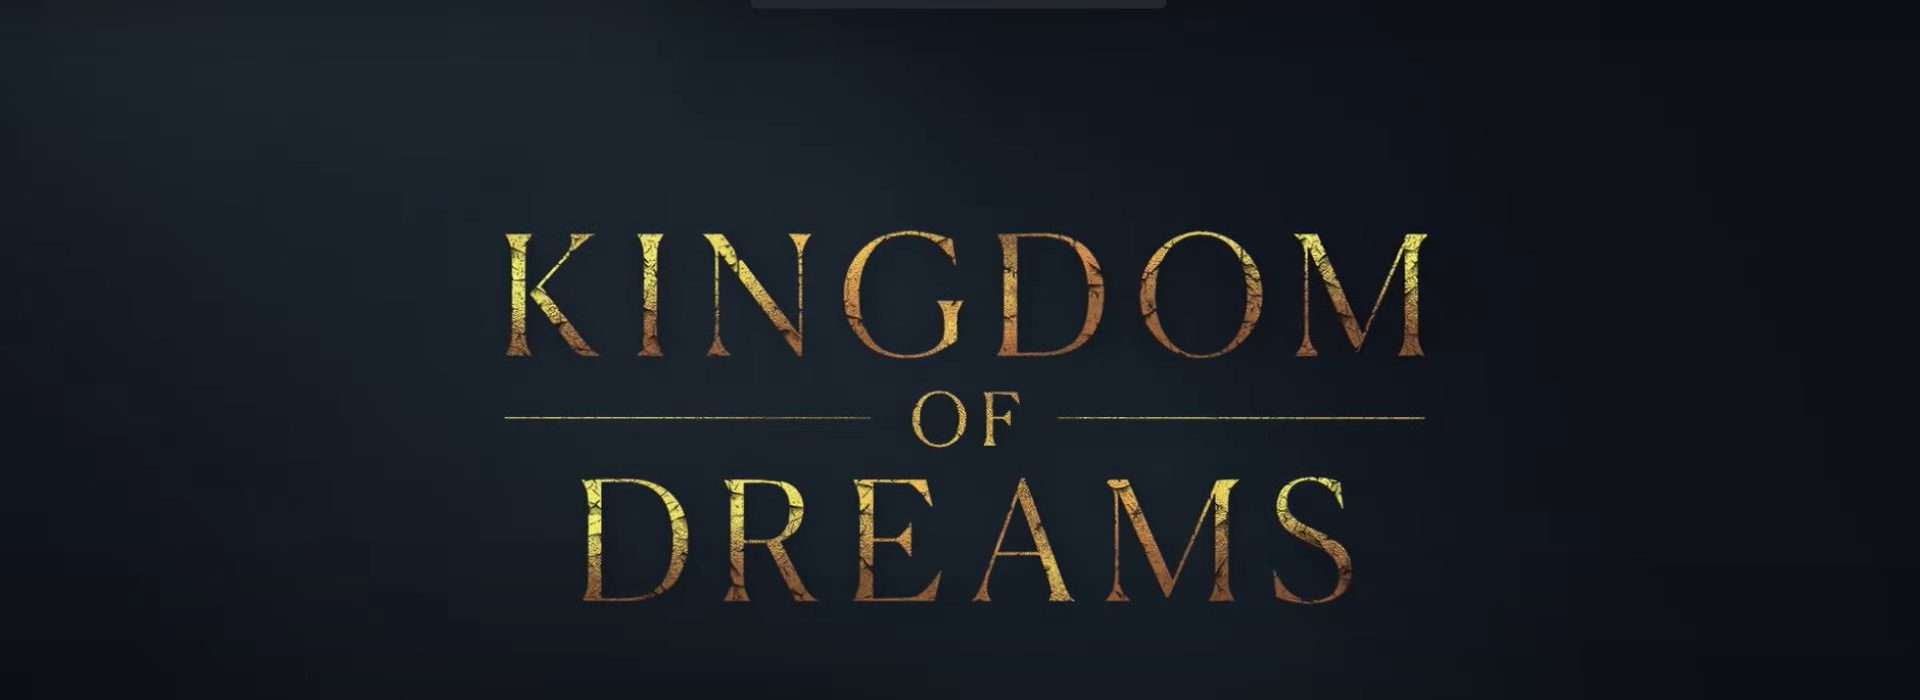 The Kingdom Of Dreams trailer